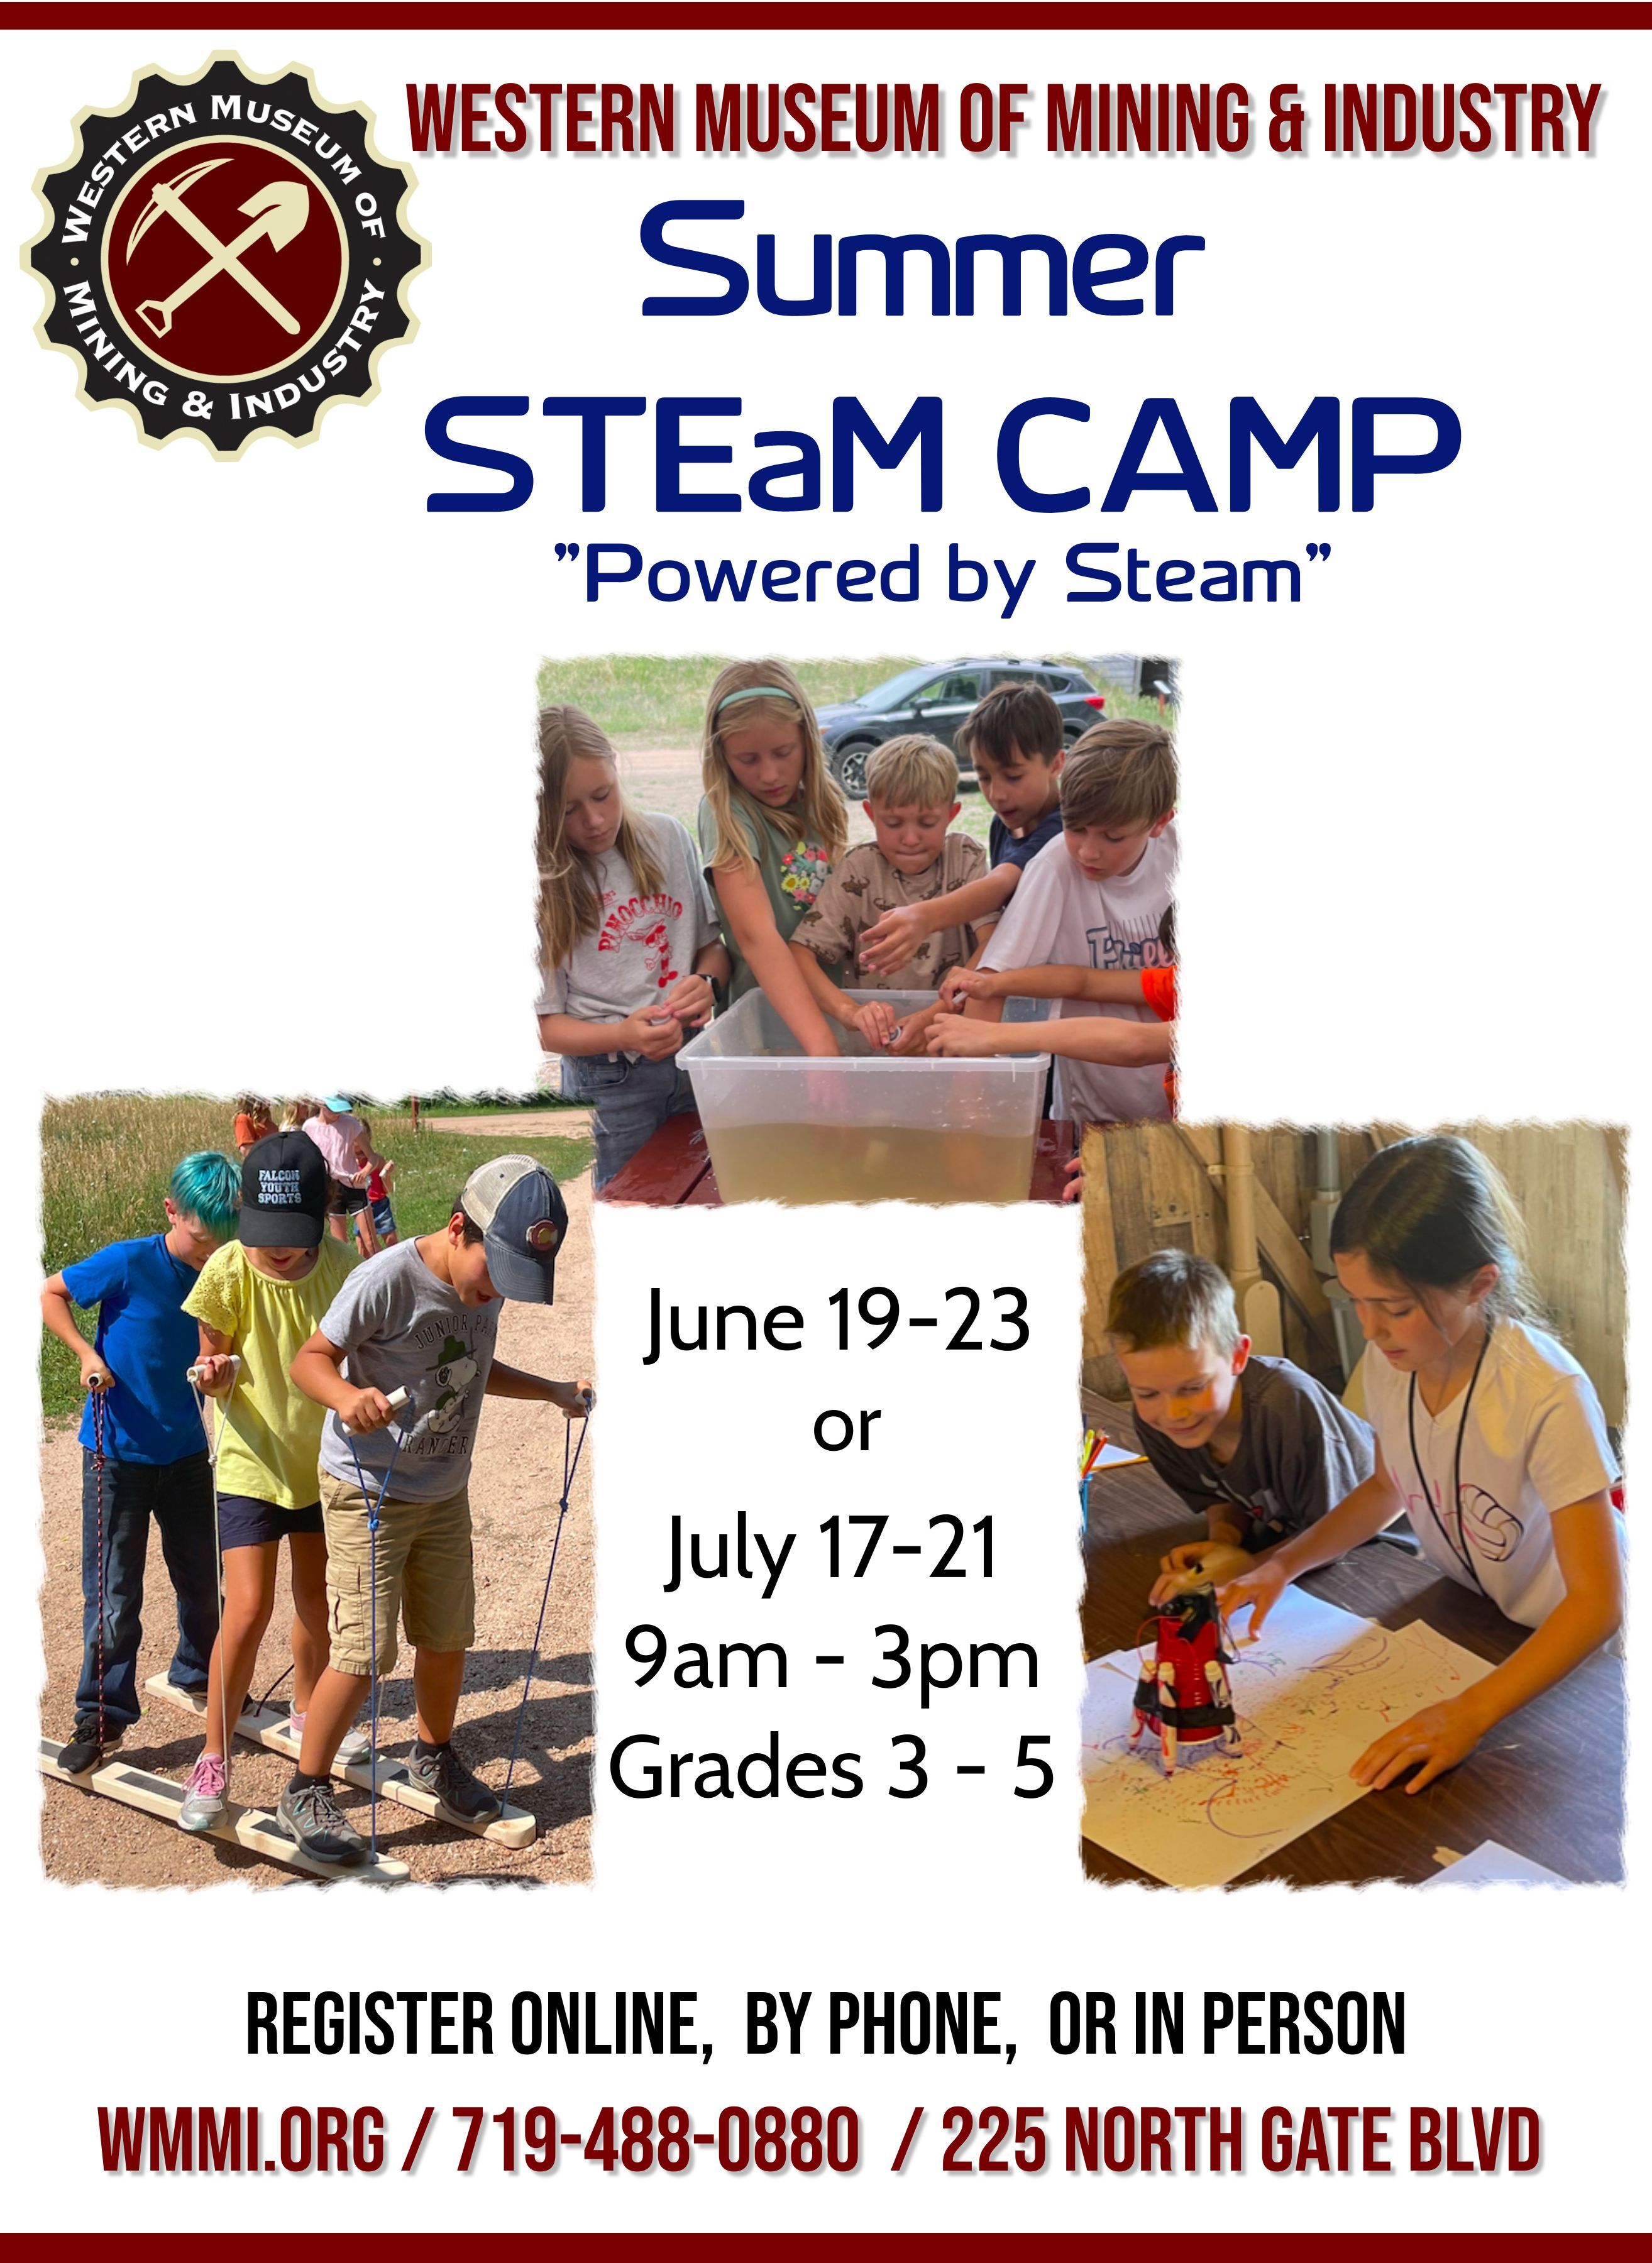 STEaM CAMP: Summer Camps